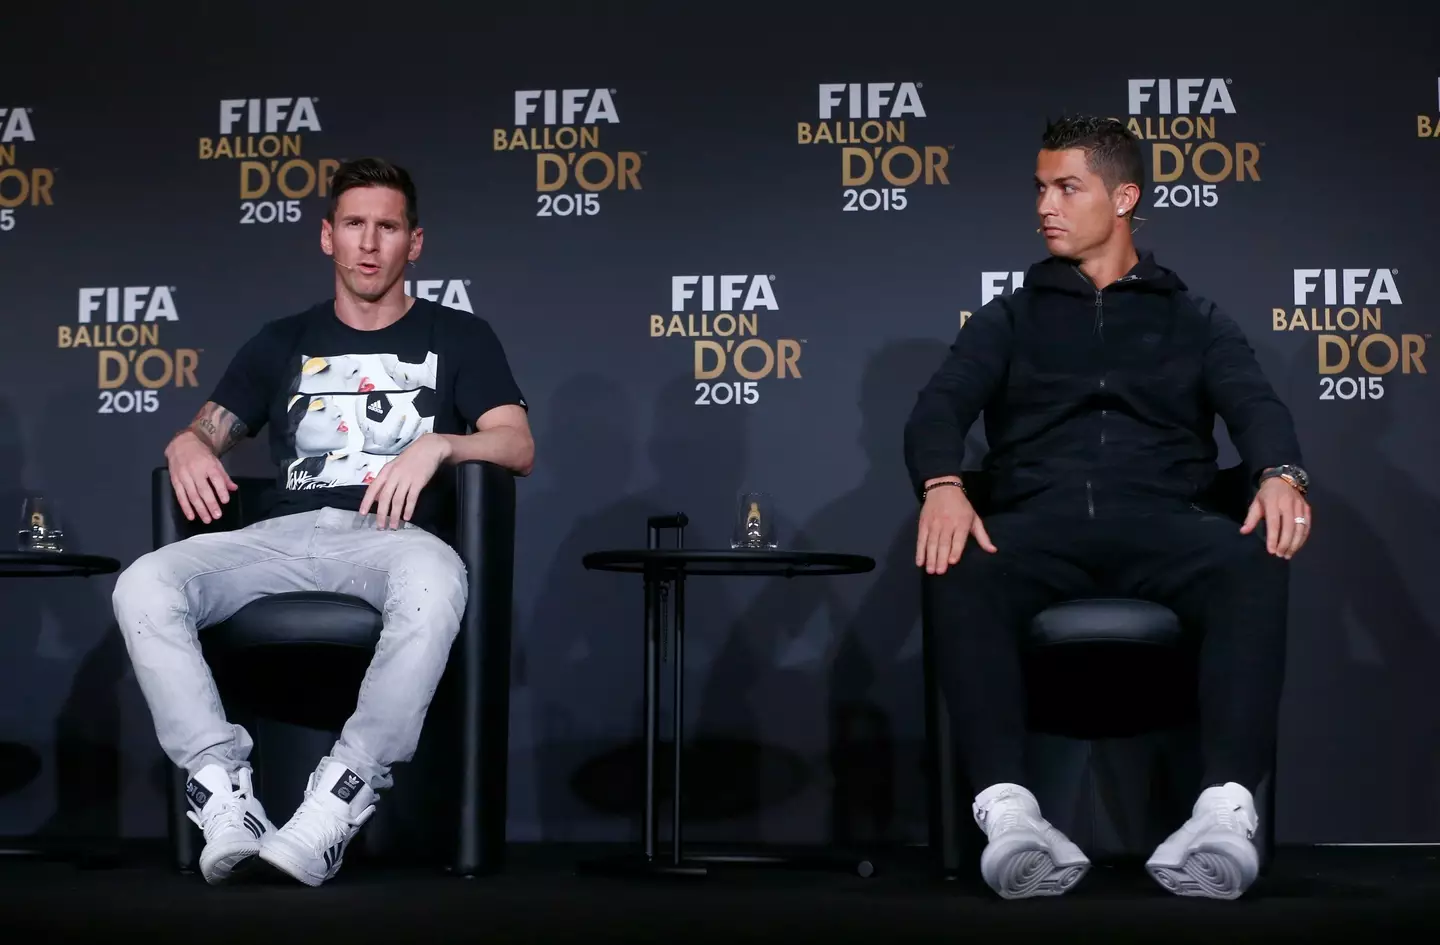 Ronaldo and Messi won't be playing together next season. Image: Alamy